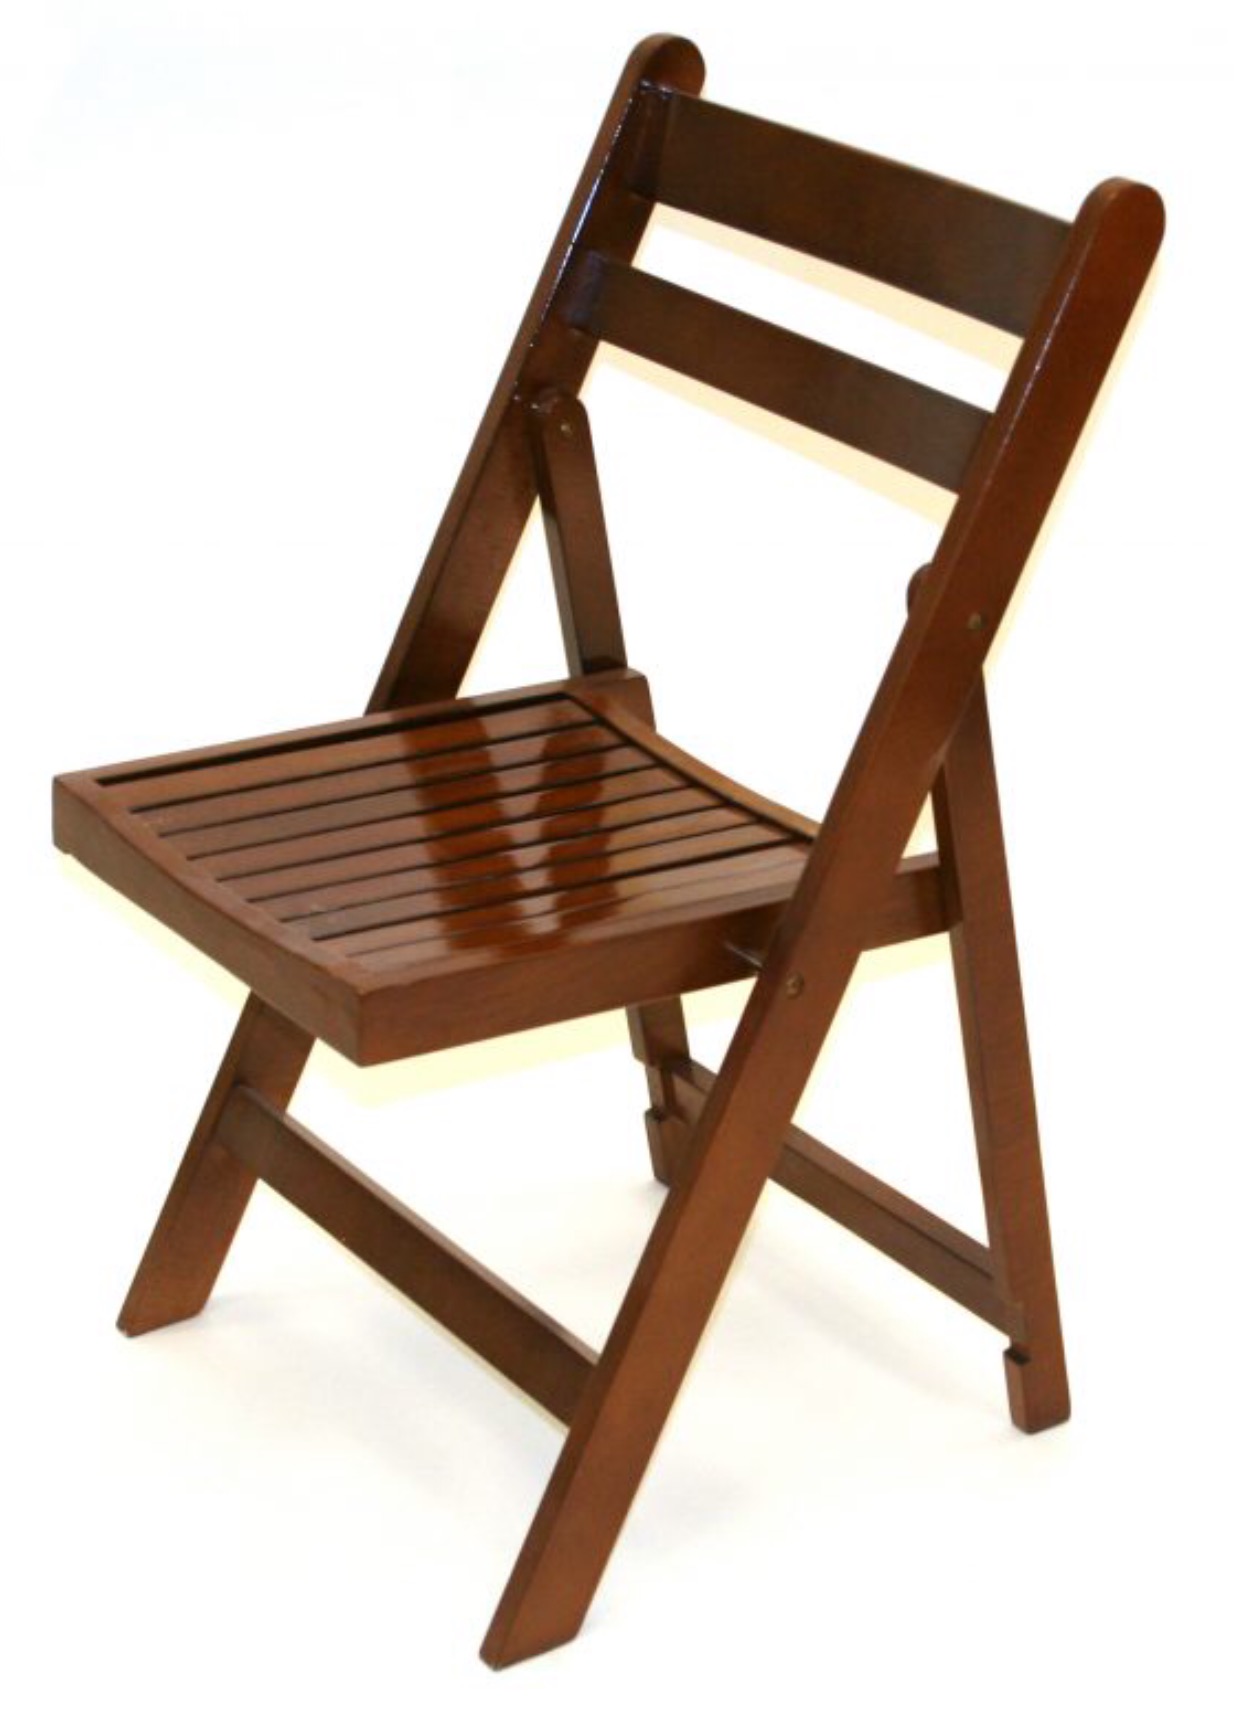 Wooden folding chair dark finish